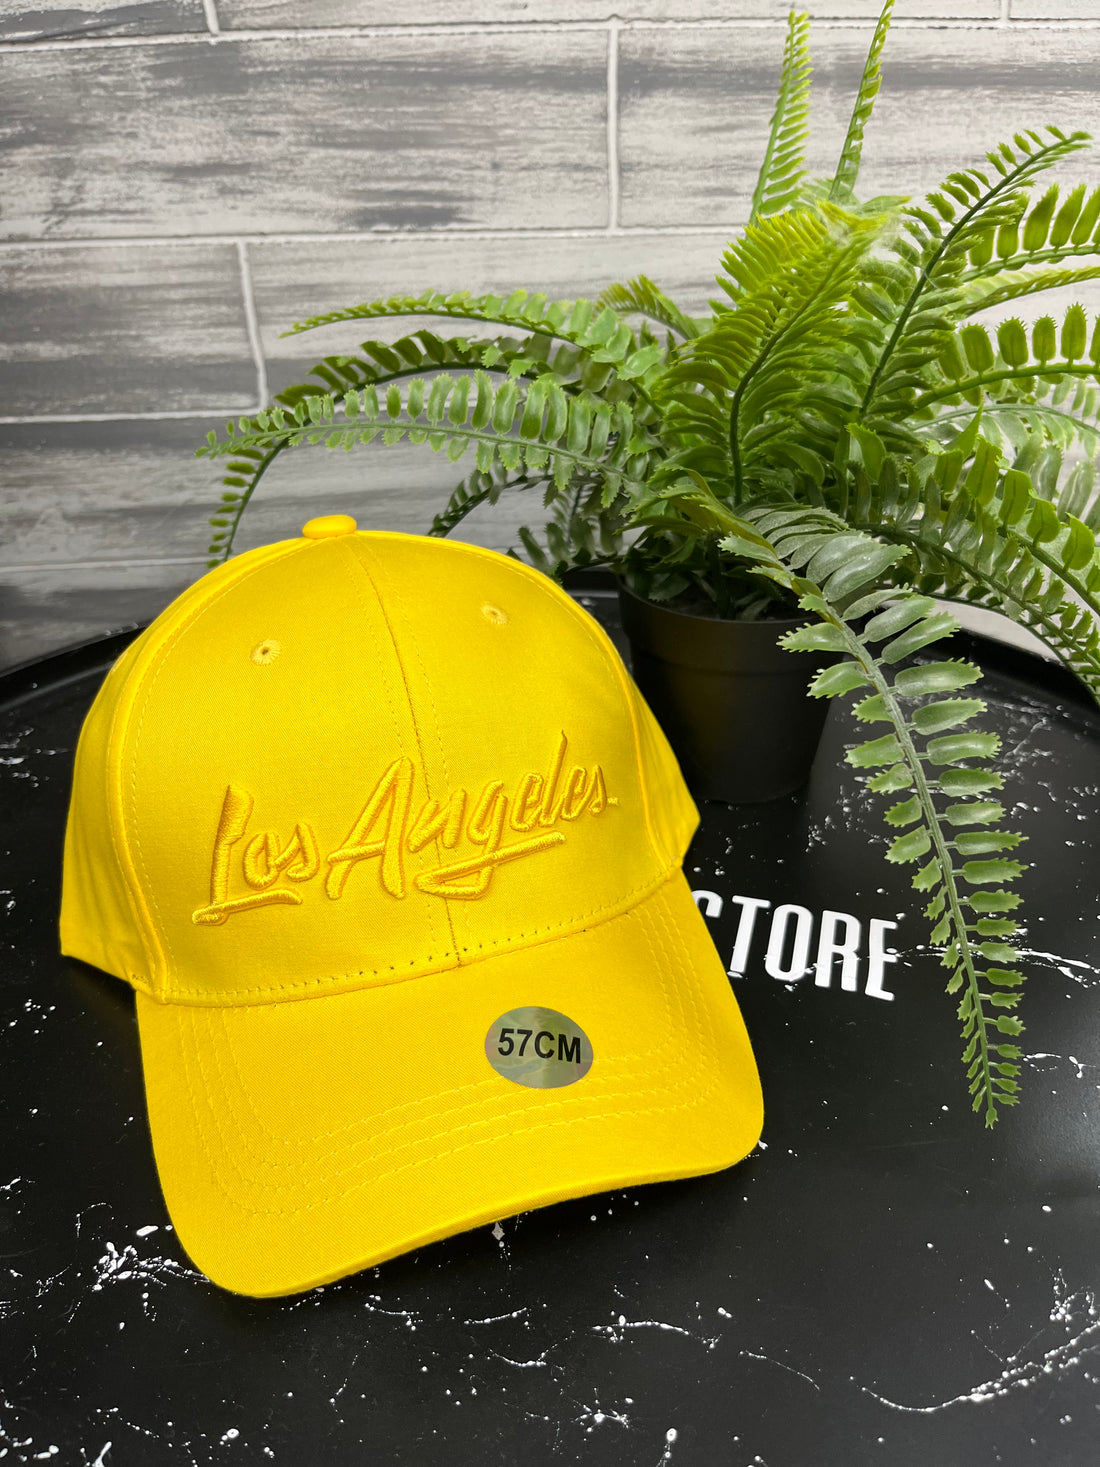 Casquette Los Angeles jaune - Stayin